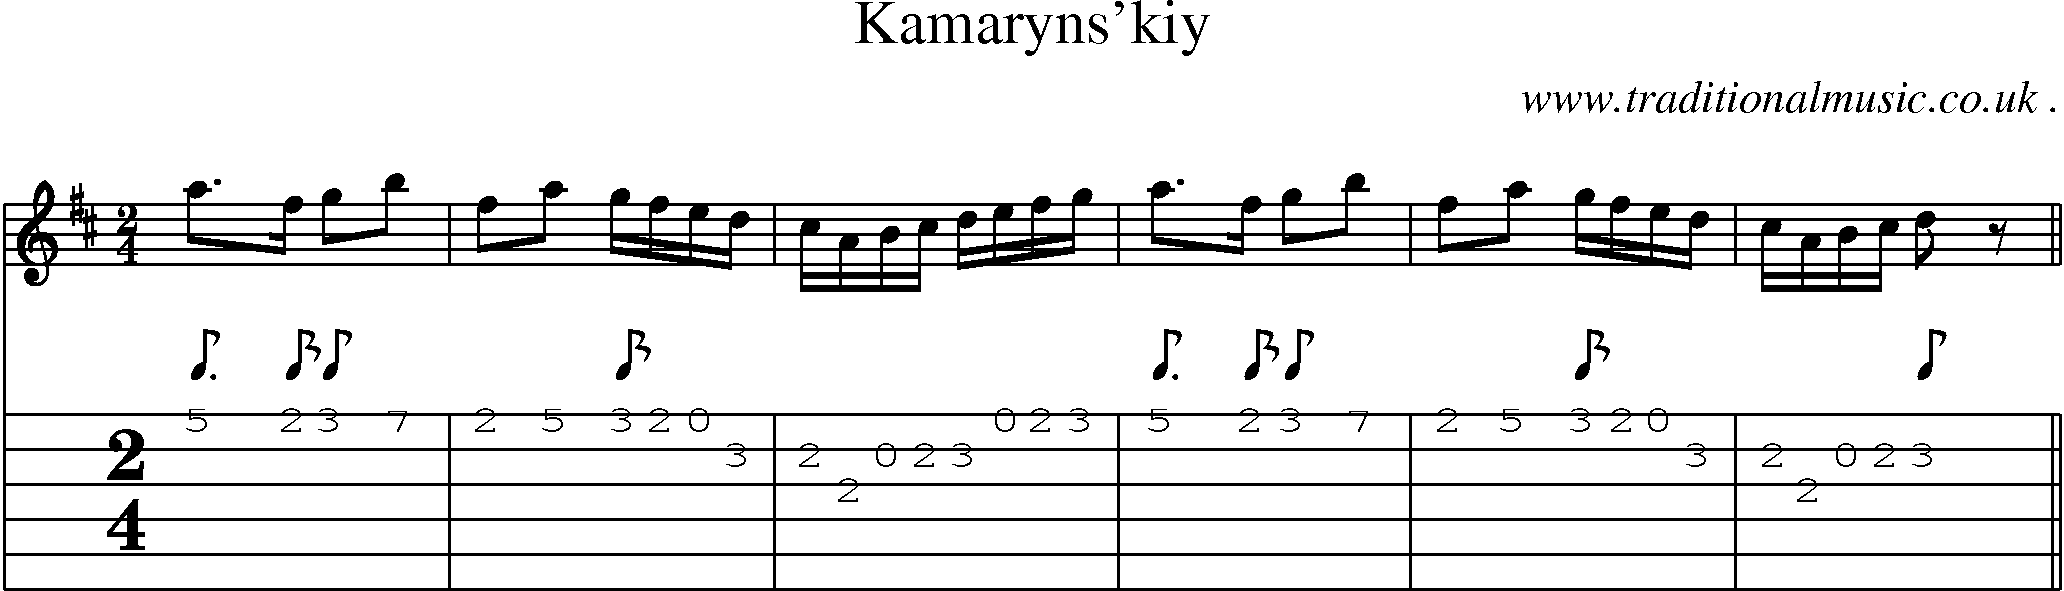 Sheet-Music and Guitar Tabs for Kamarynskiy